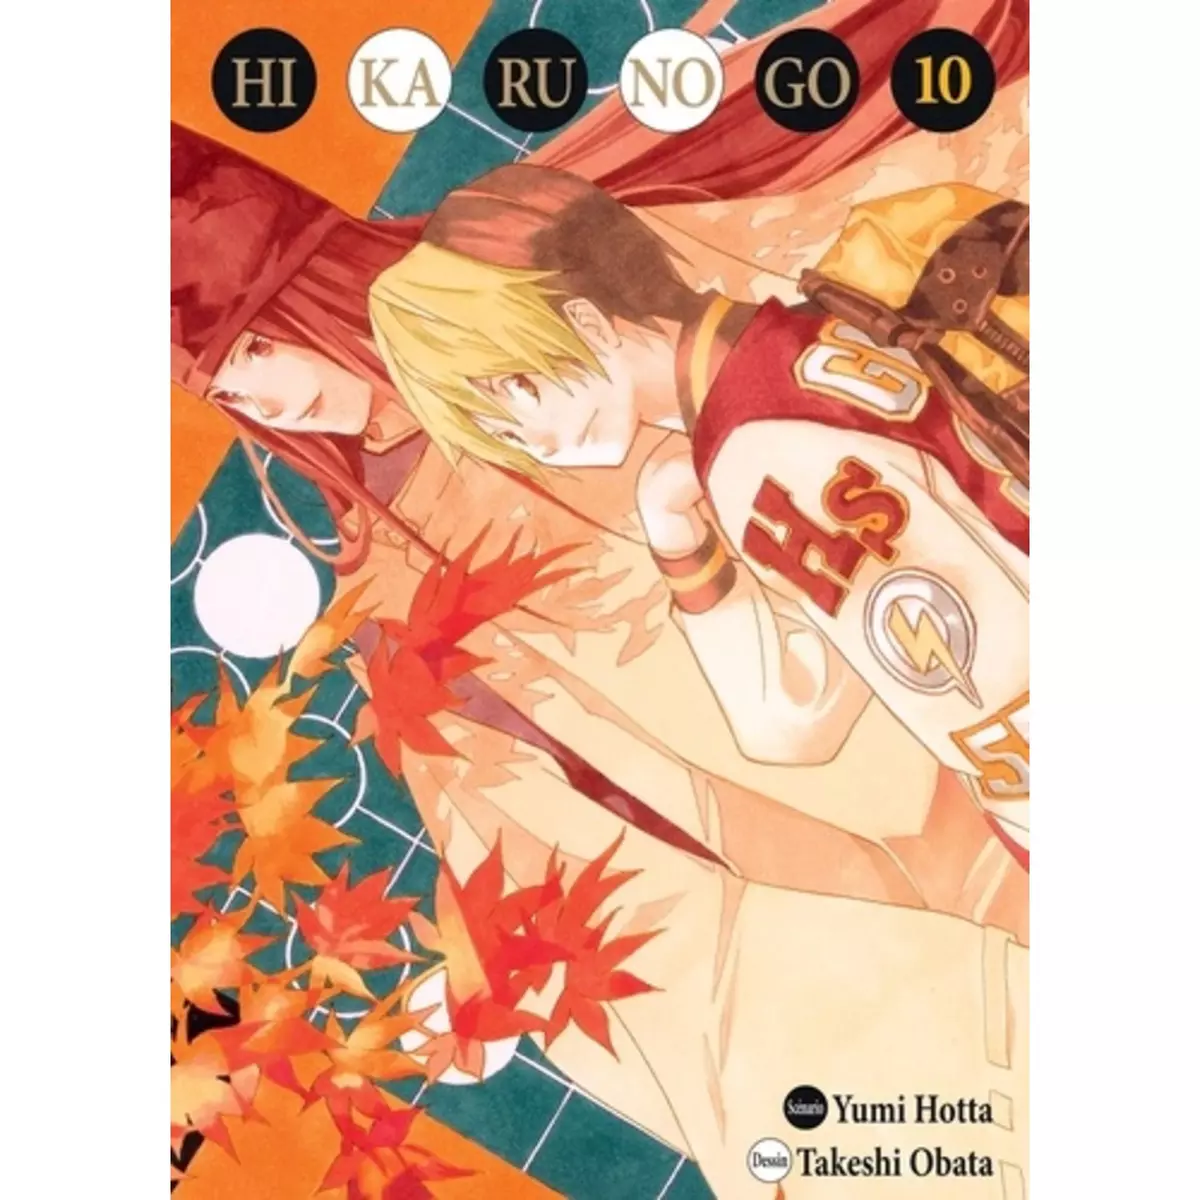  HIKARU NO GO TOME 10 . EDITION DE LUXE, Hotta Yumi